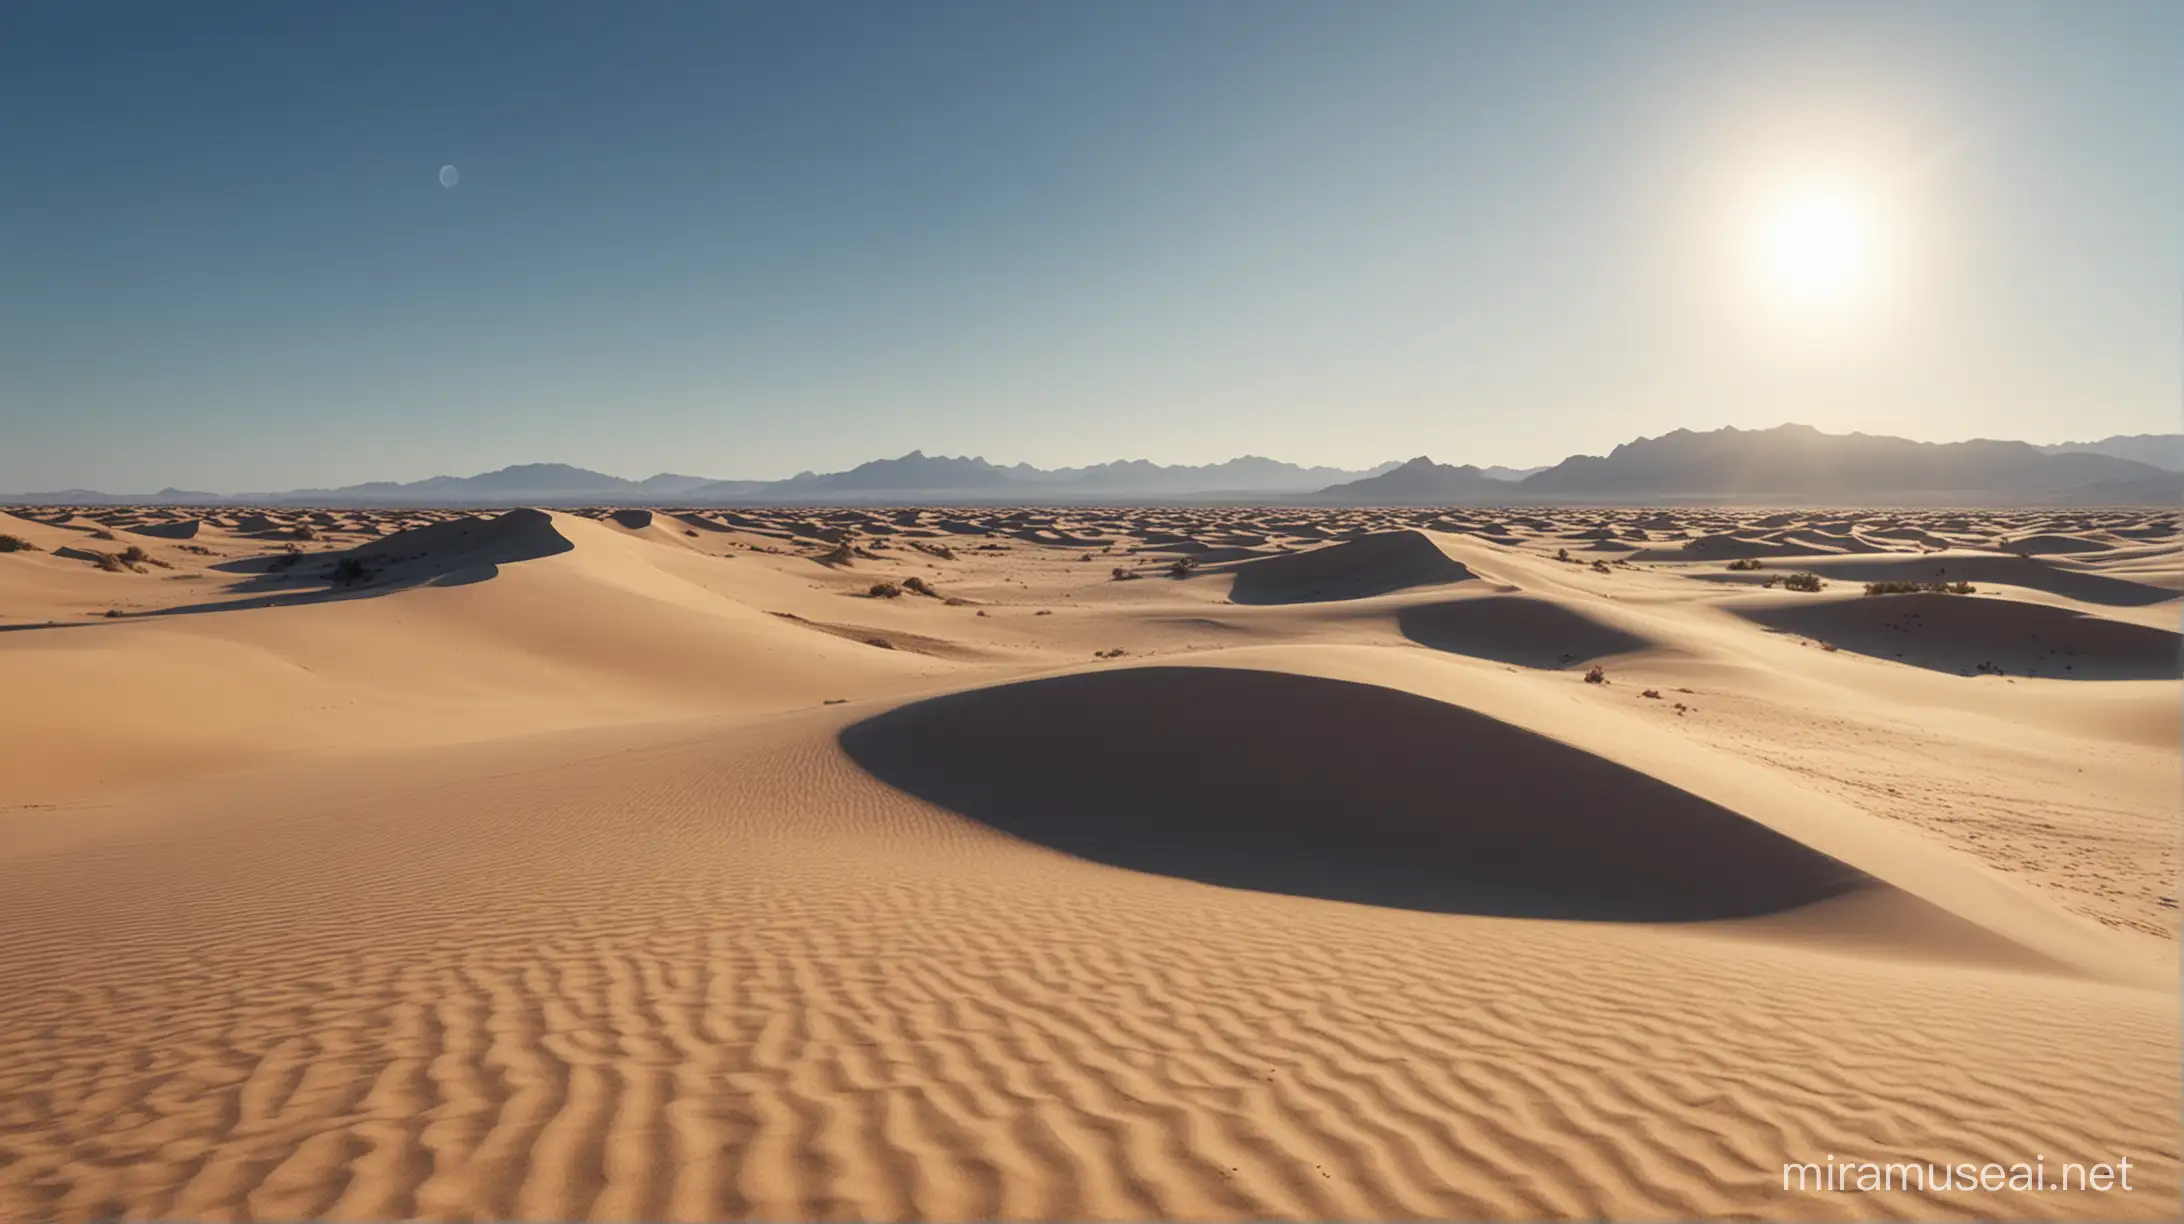 Serene Desert Landscape with Sand Dunes and Prophet Hud